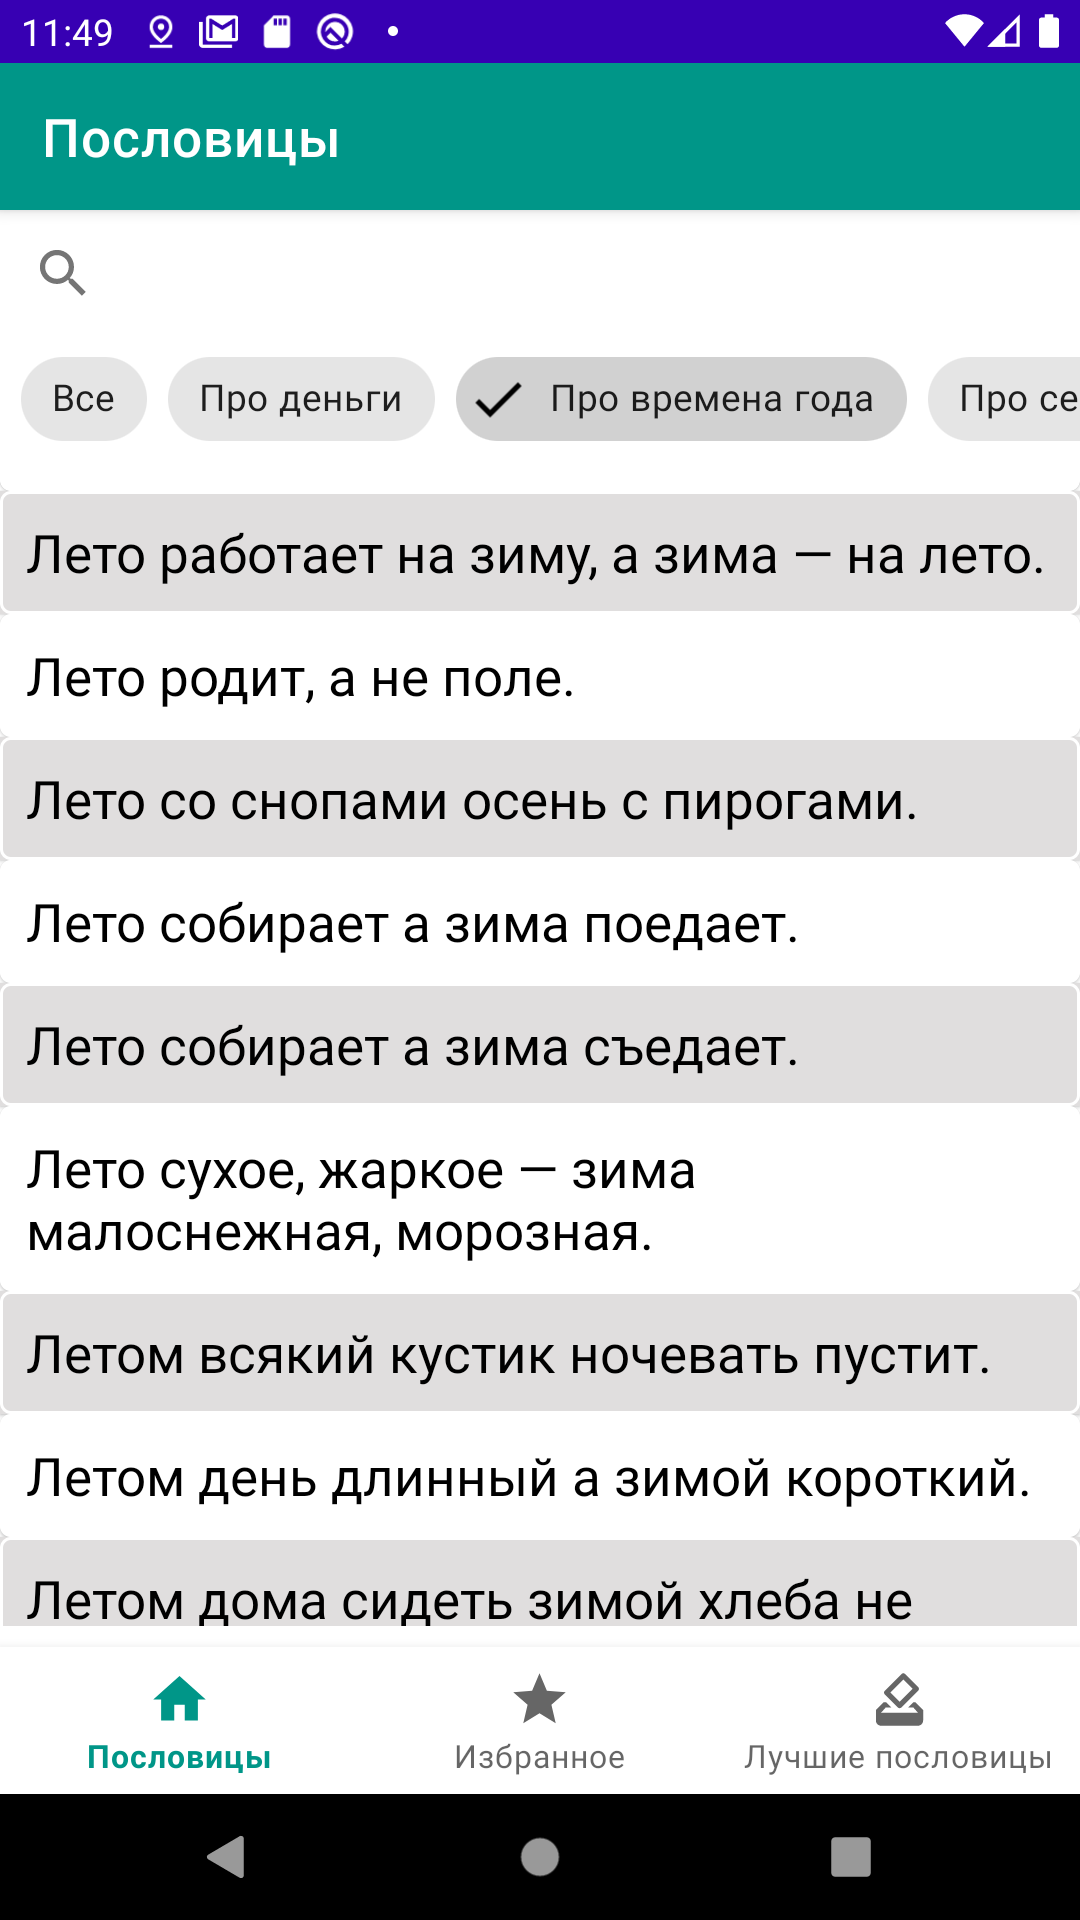 «Значение пословиц» — Яндекс Кью